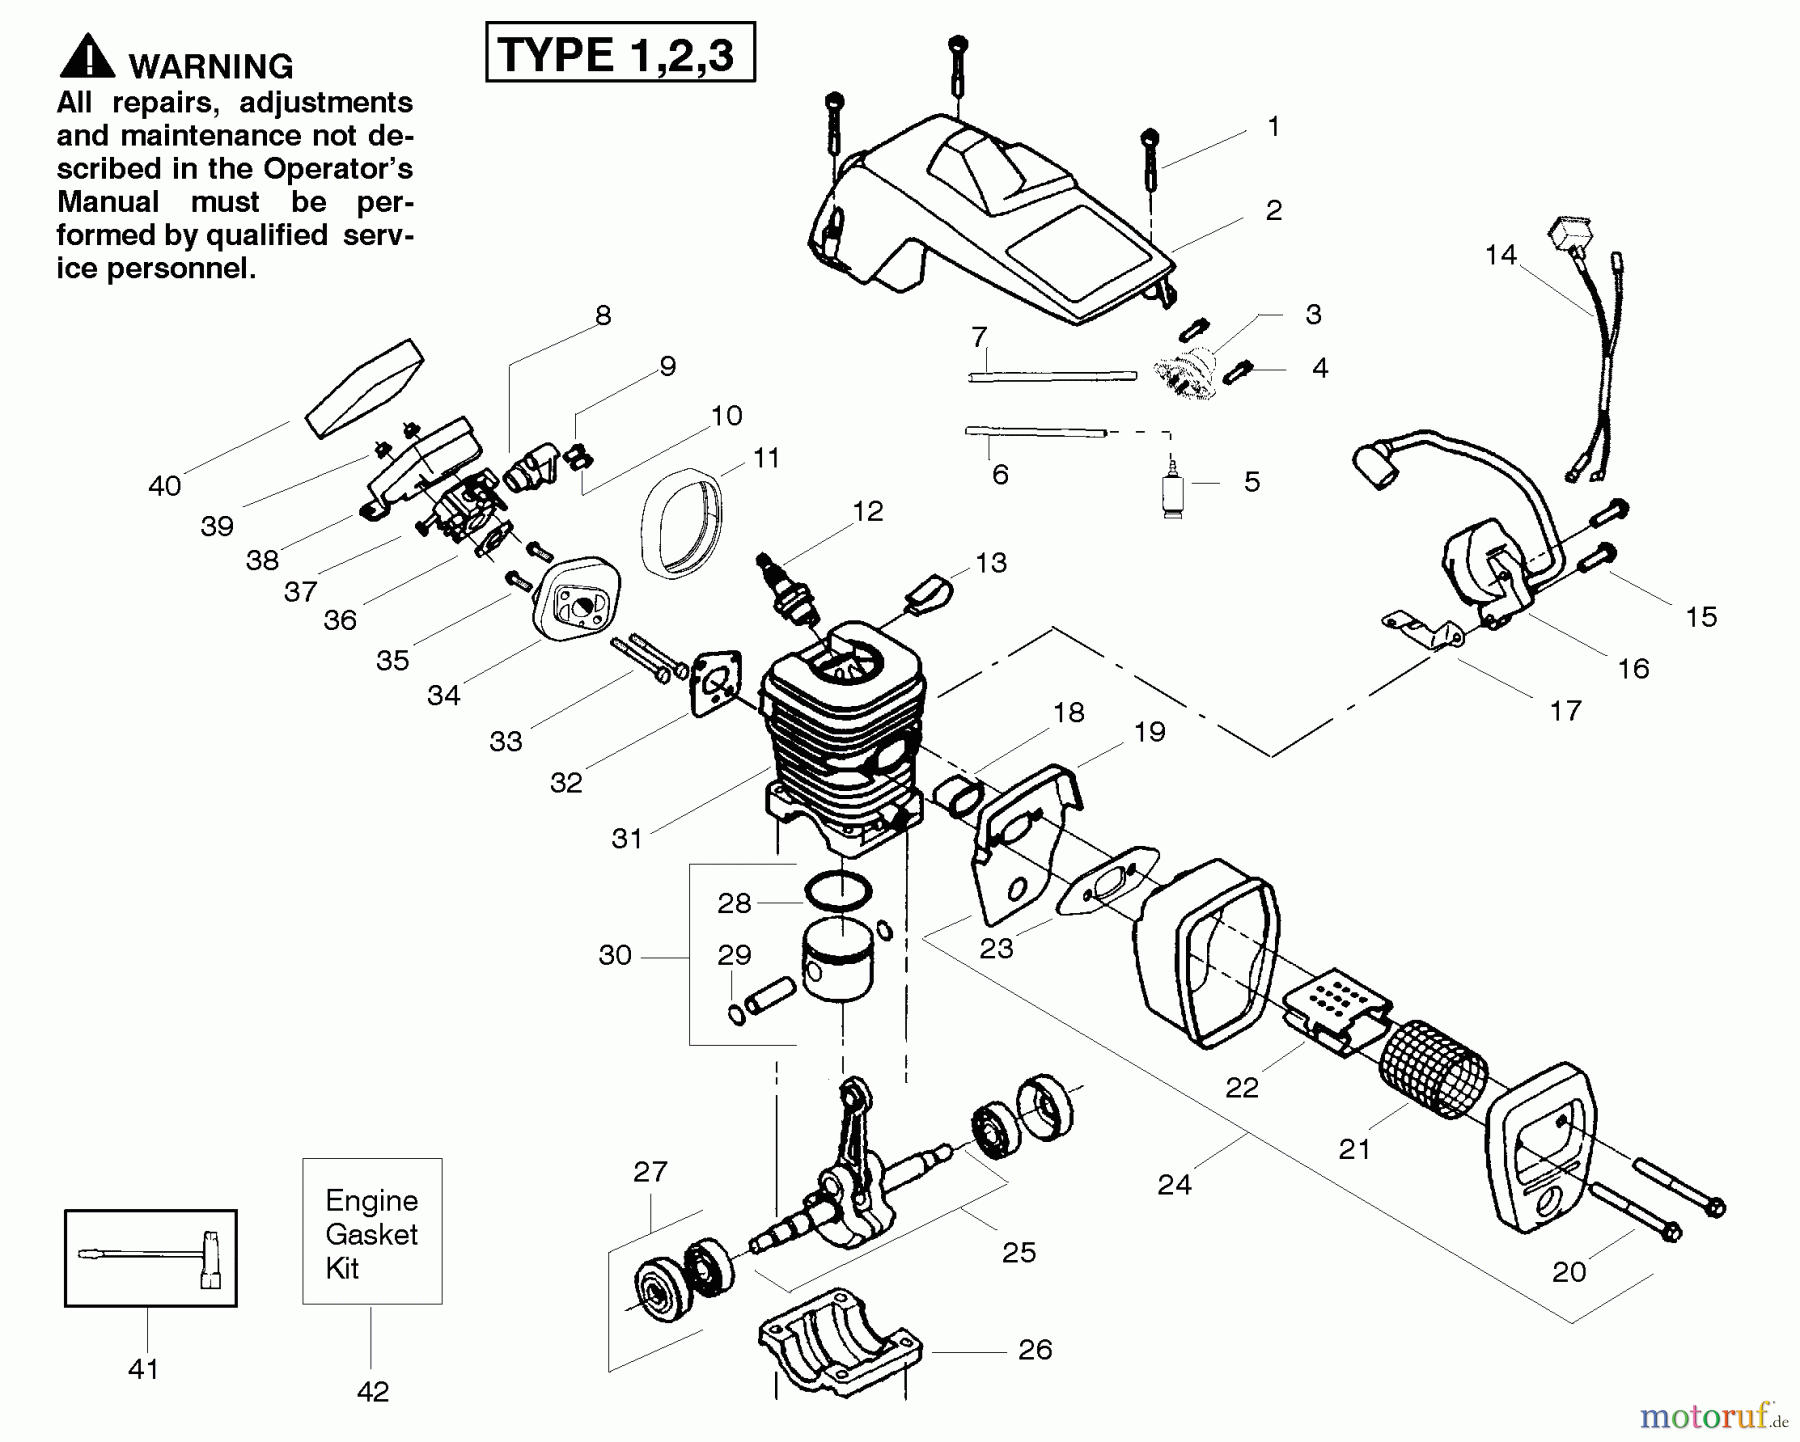  Poulan / Weed Eater Motorsägen PP260 (Type 3) - Poulan Pro Chainsaw Engine Type 1,2,3